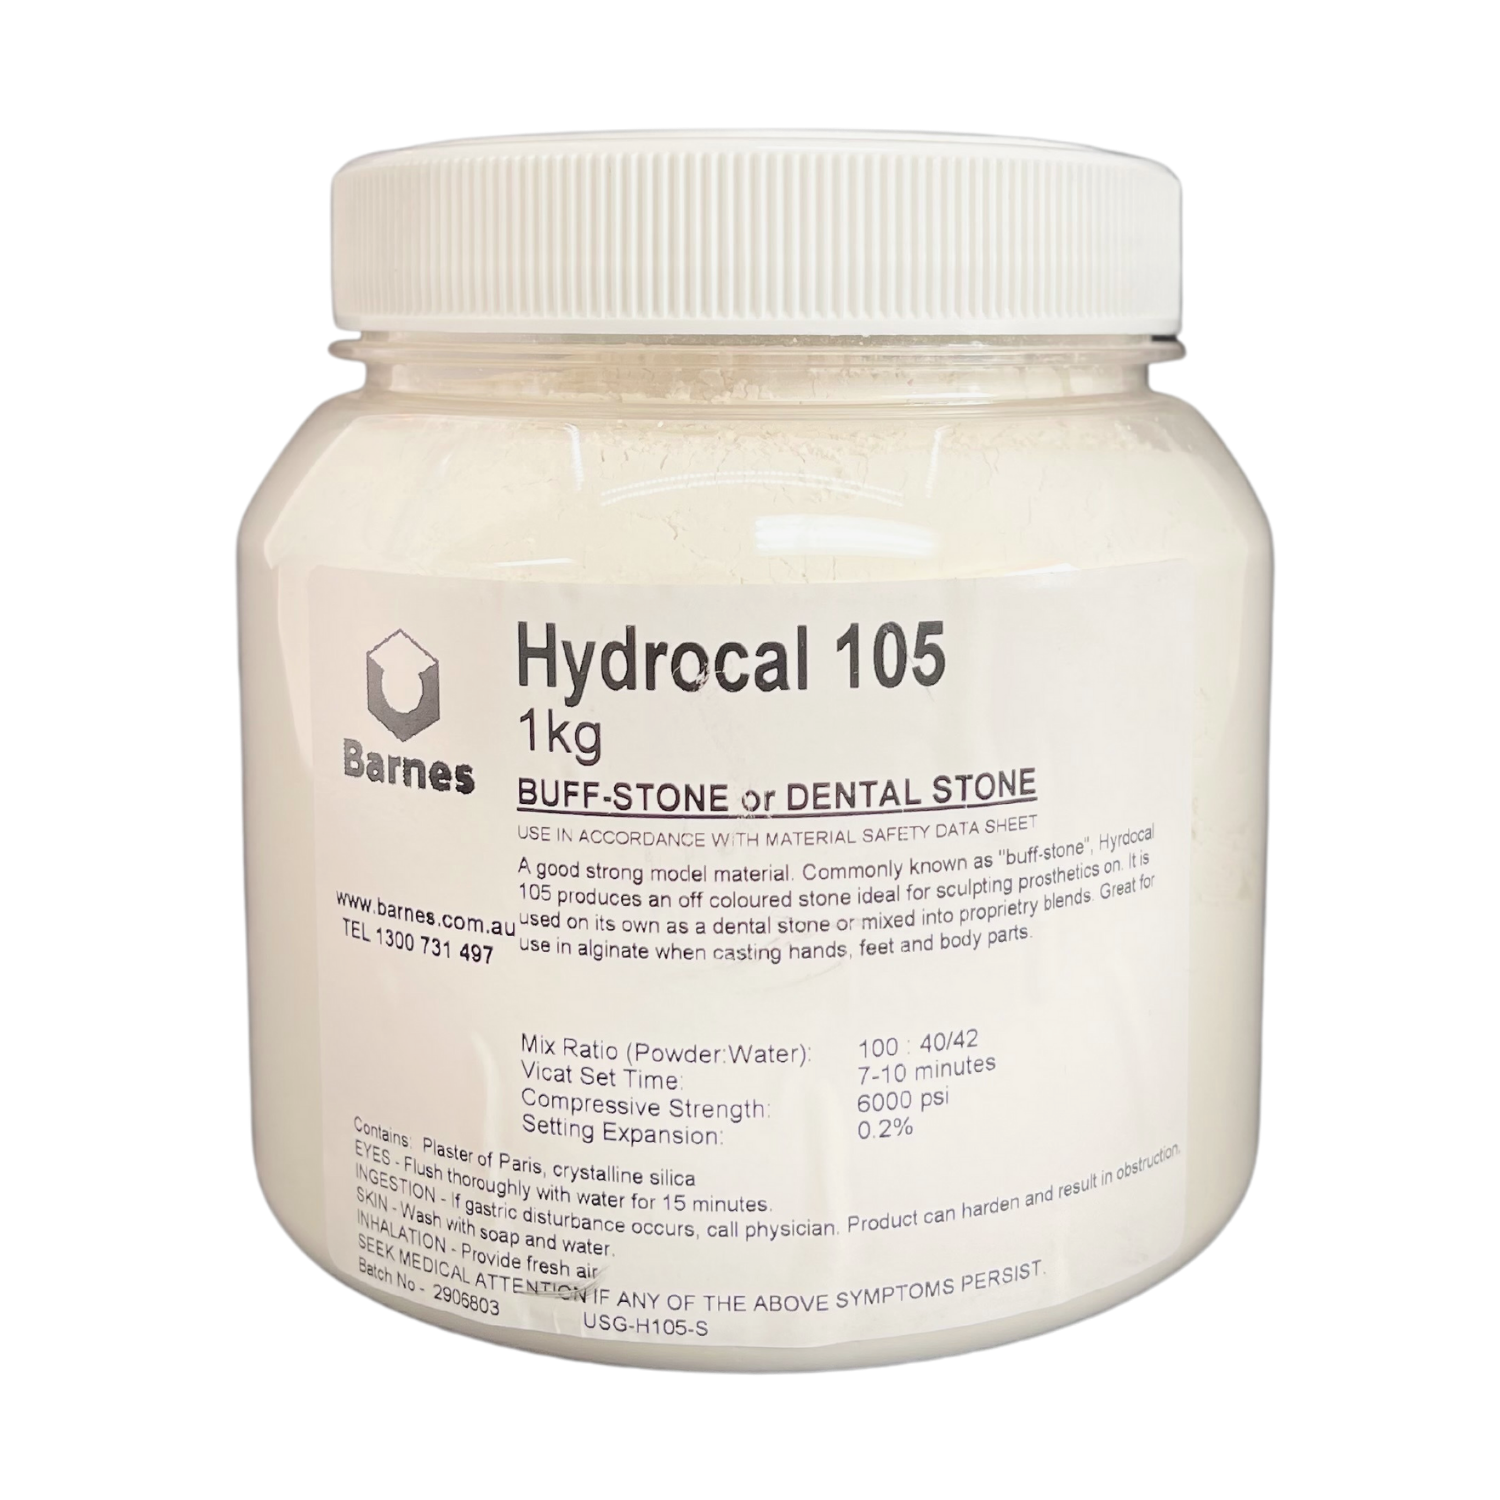 Hydrocal 105